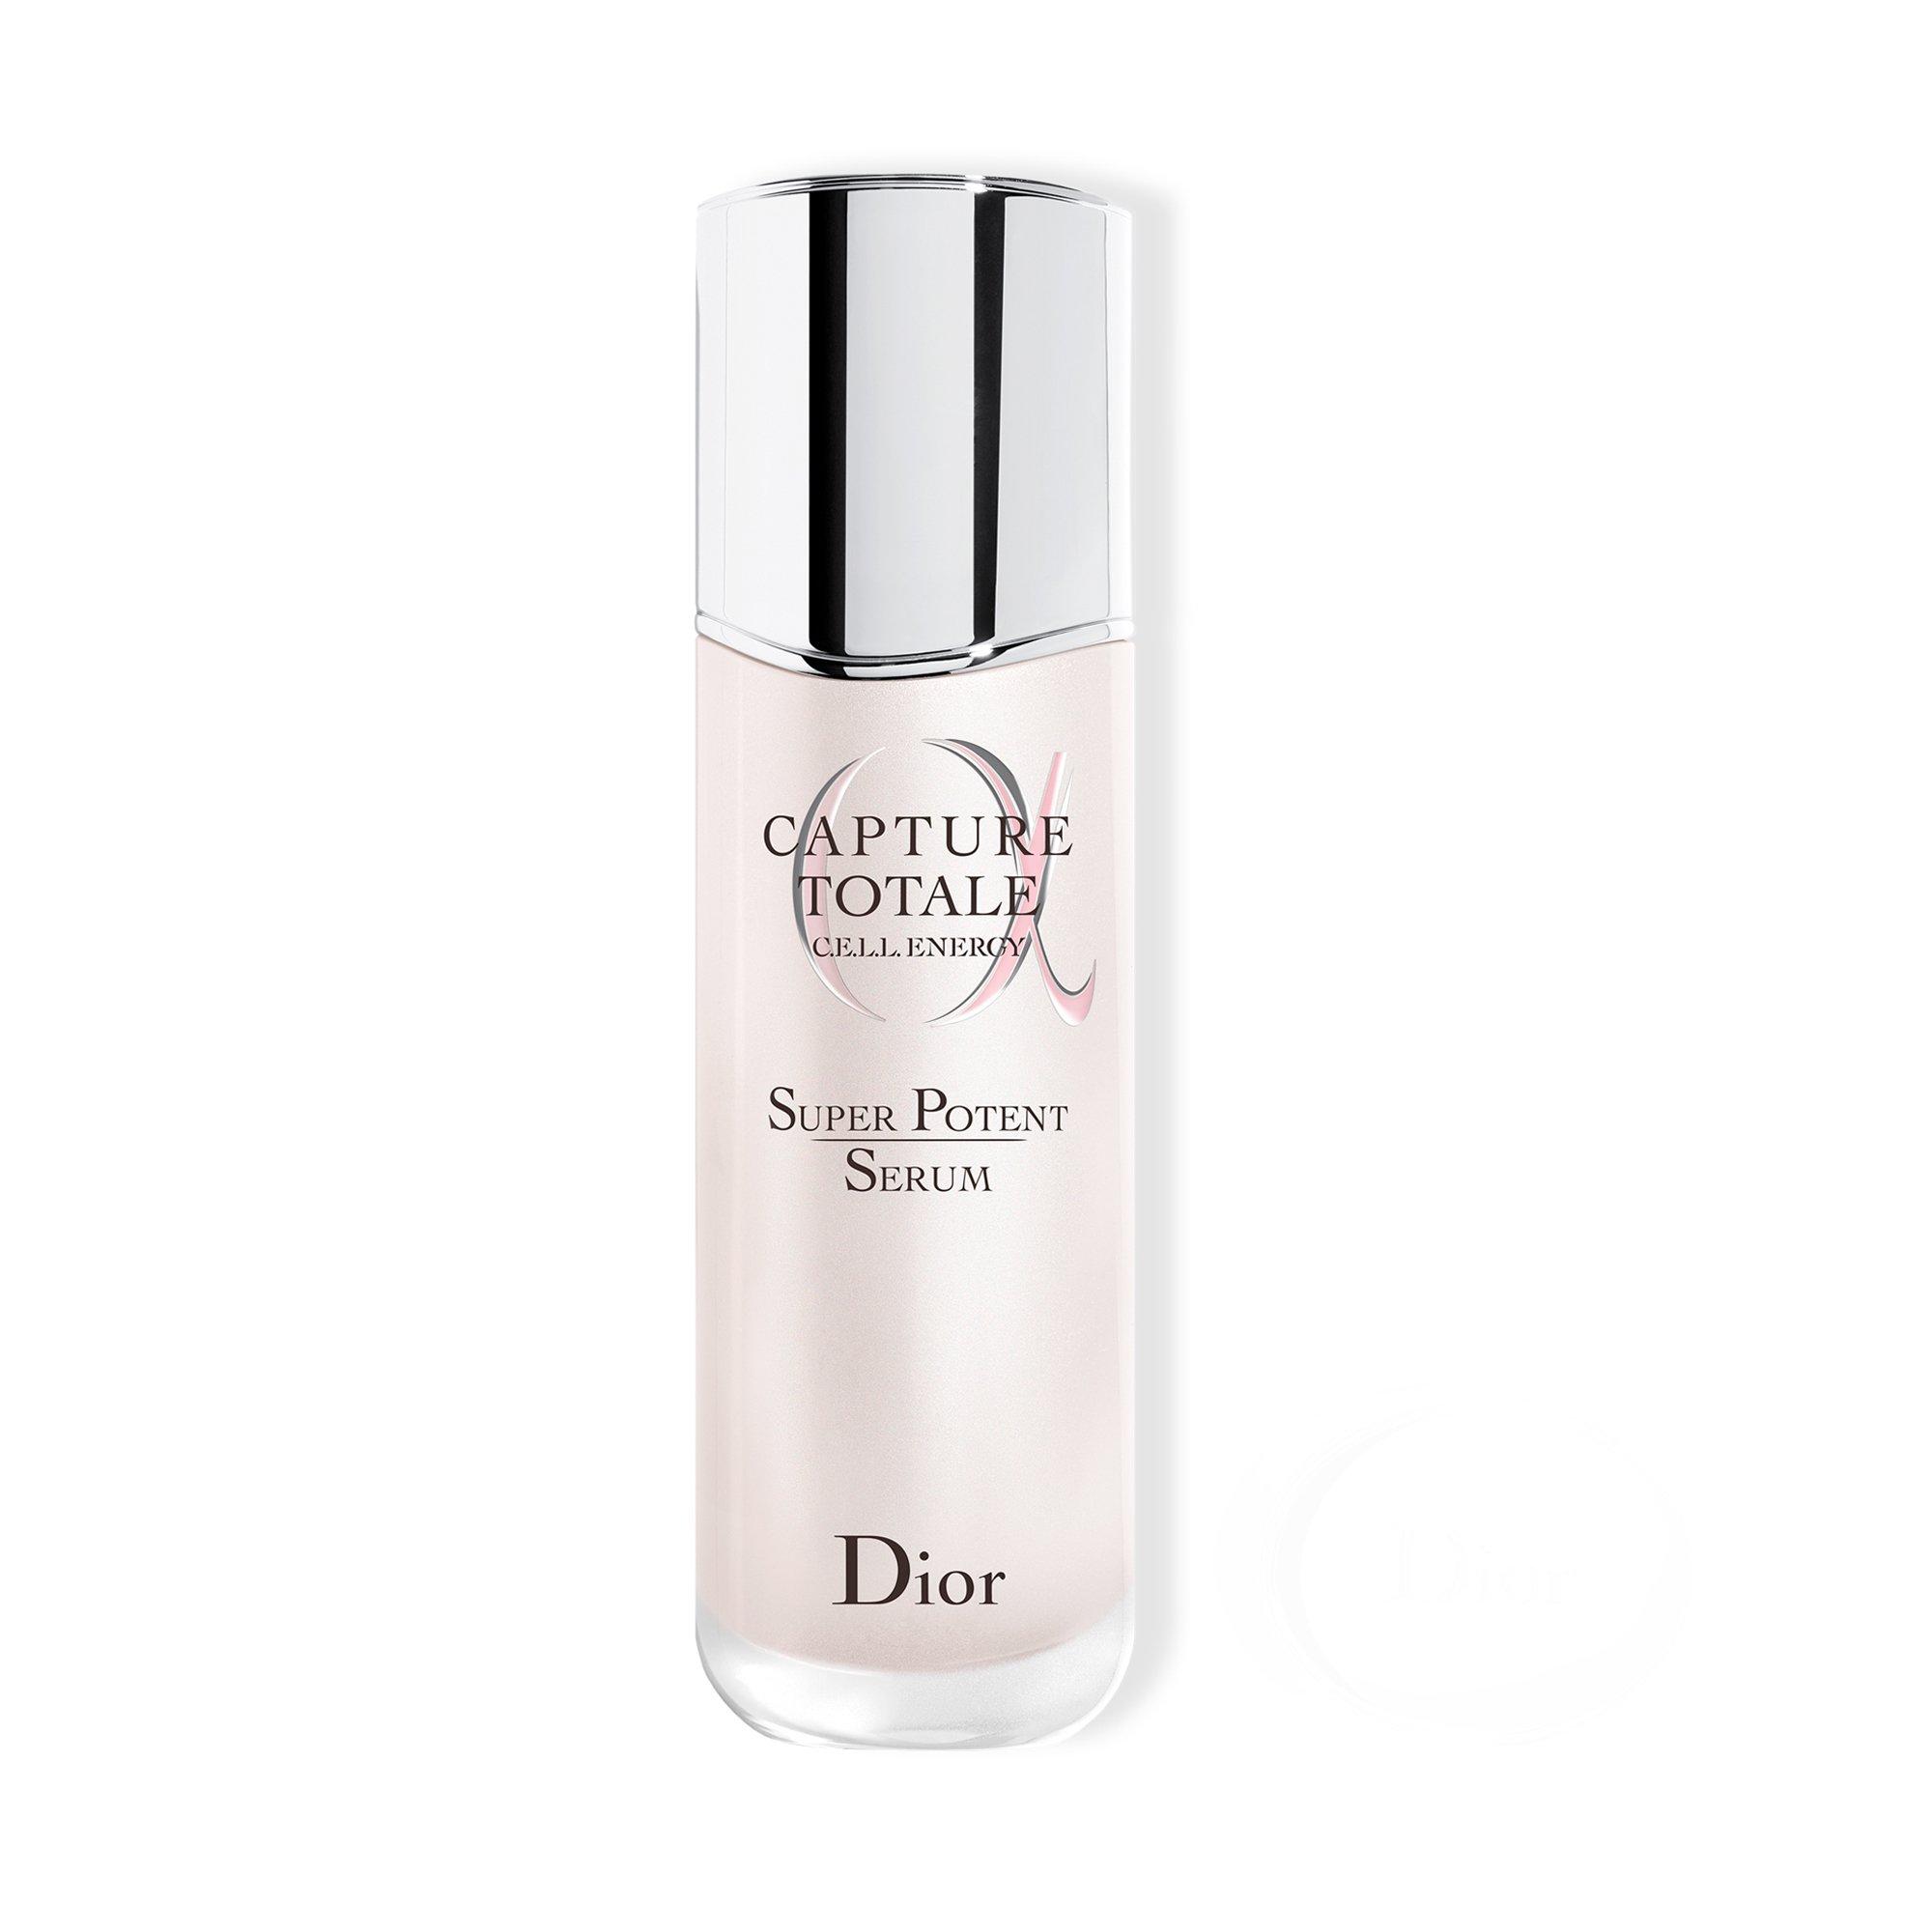 Image of Dior Capture Totale Super Potent Serum - 75ml